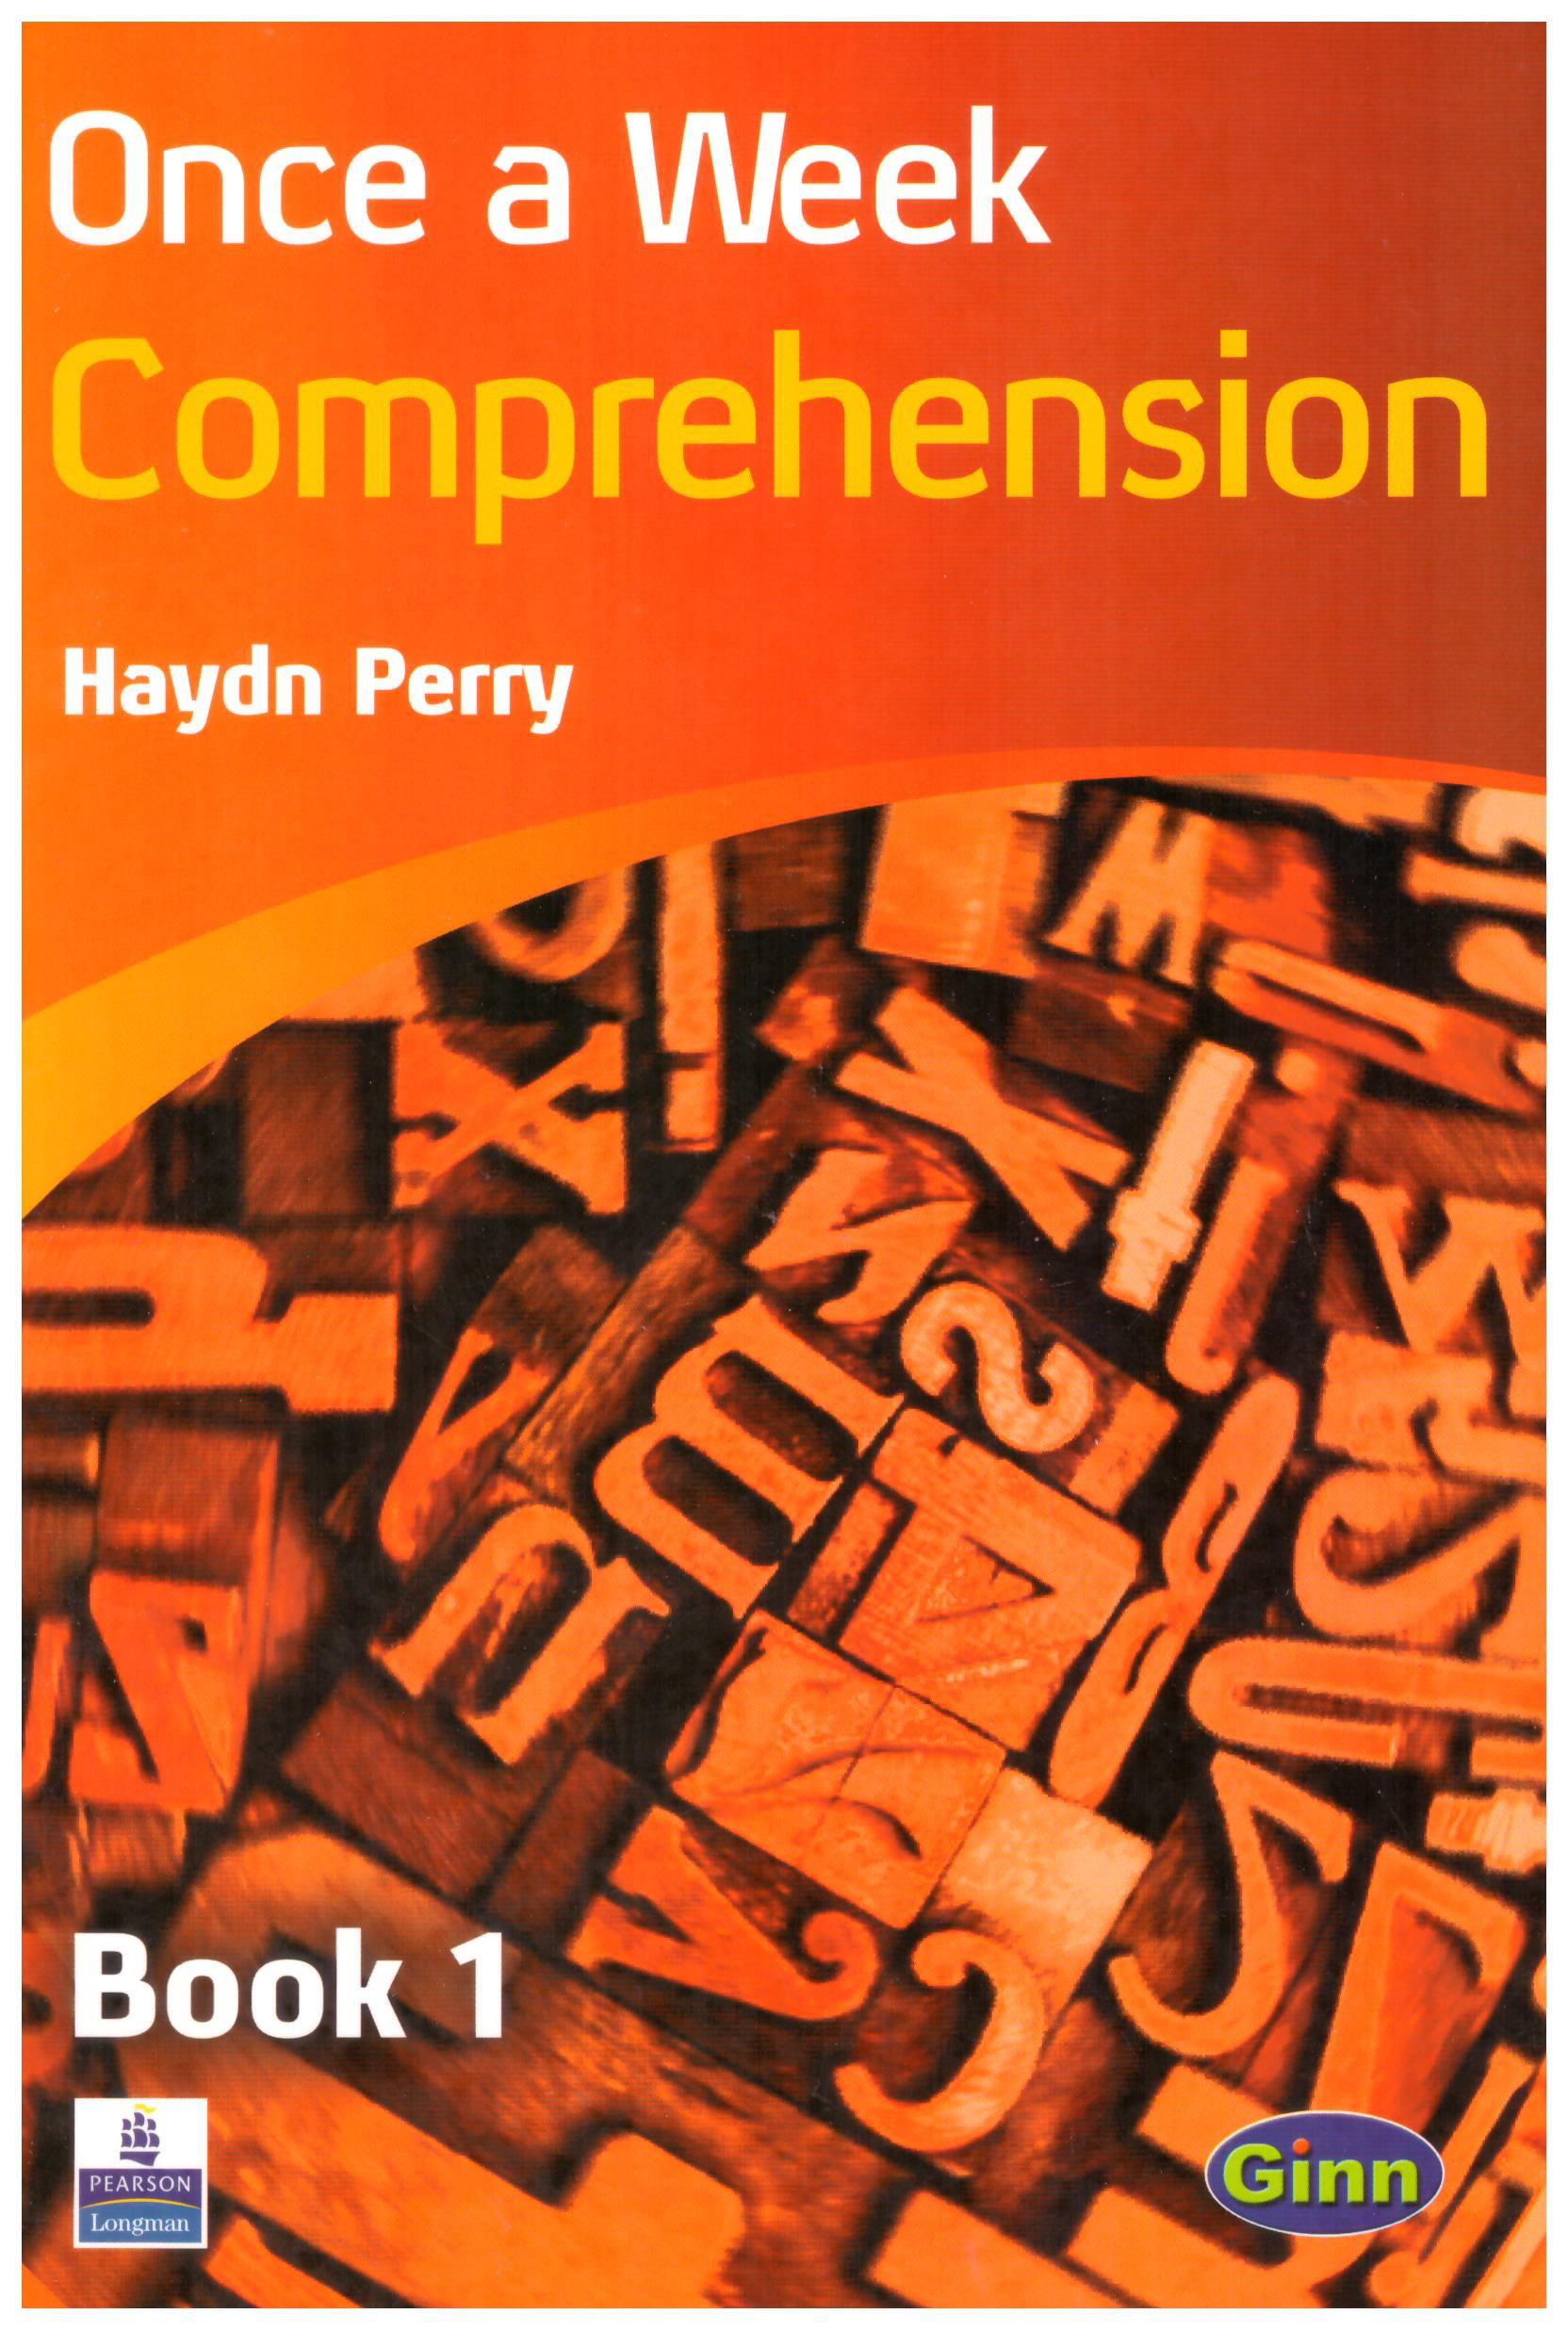 Once a Week Comprehension Book 1